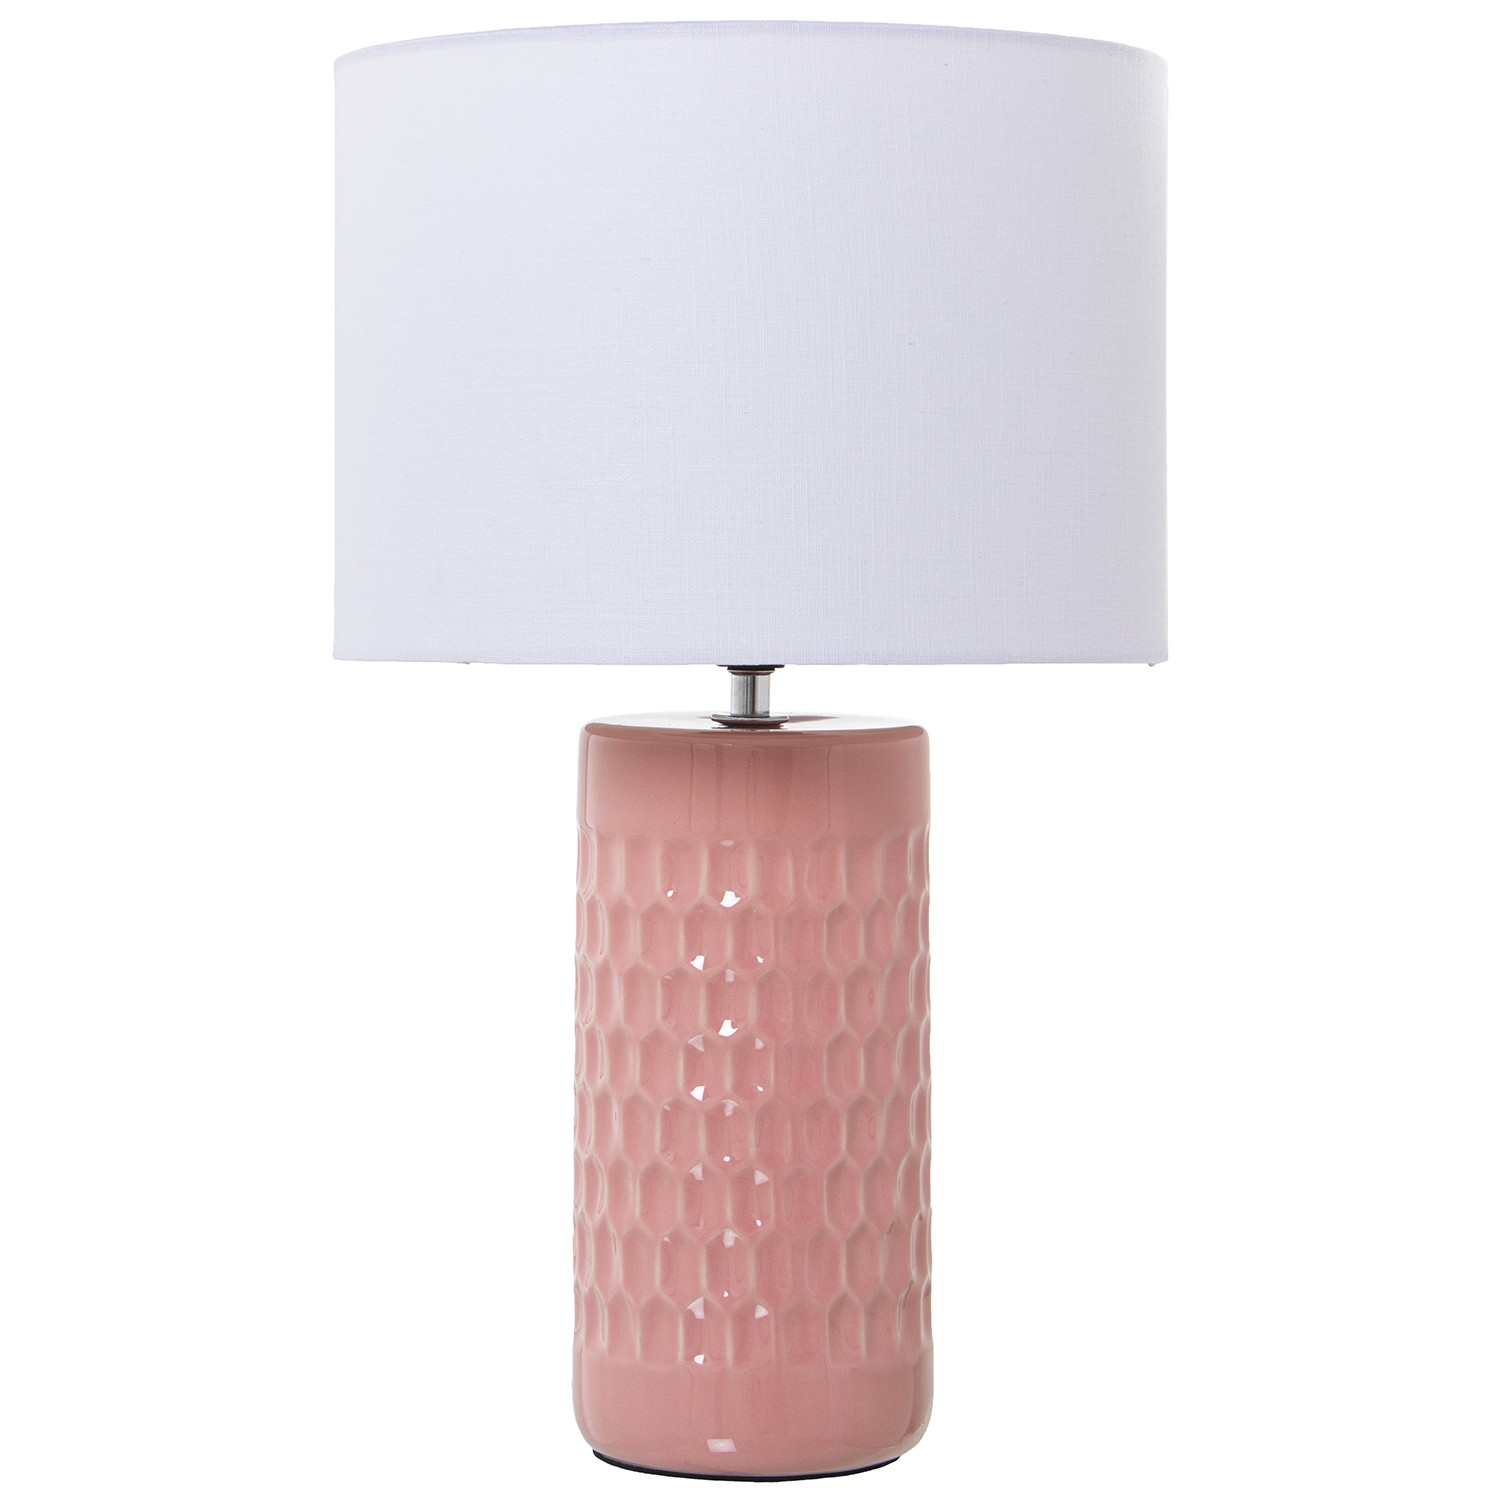 35314-lampara-ceramica-rosa-m.jpg